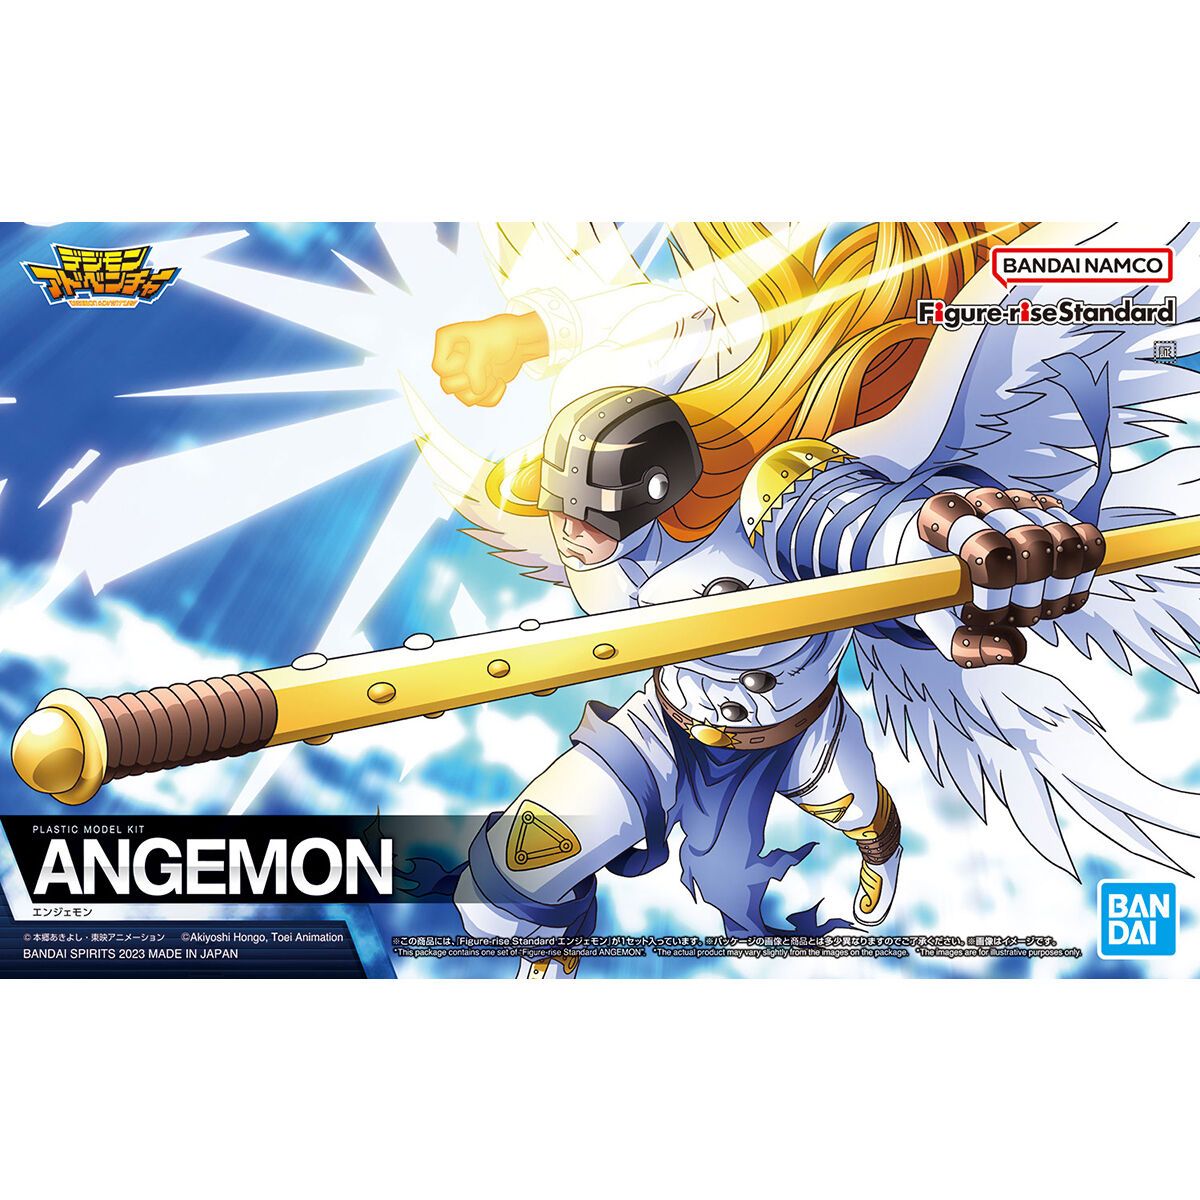 Bandai Figure-Rise Standard Angemon Model Kit